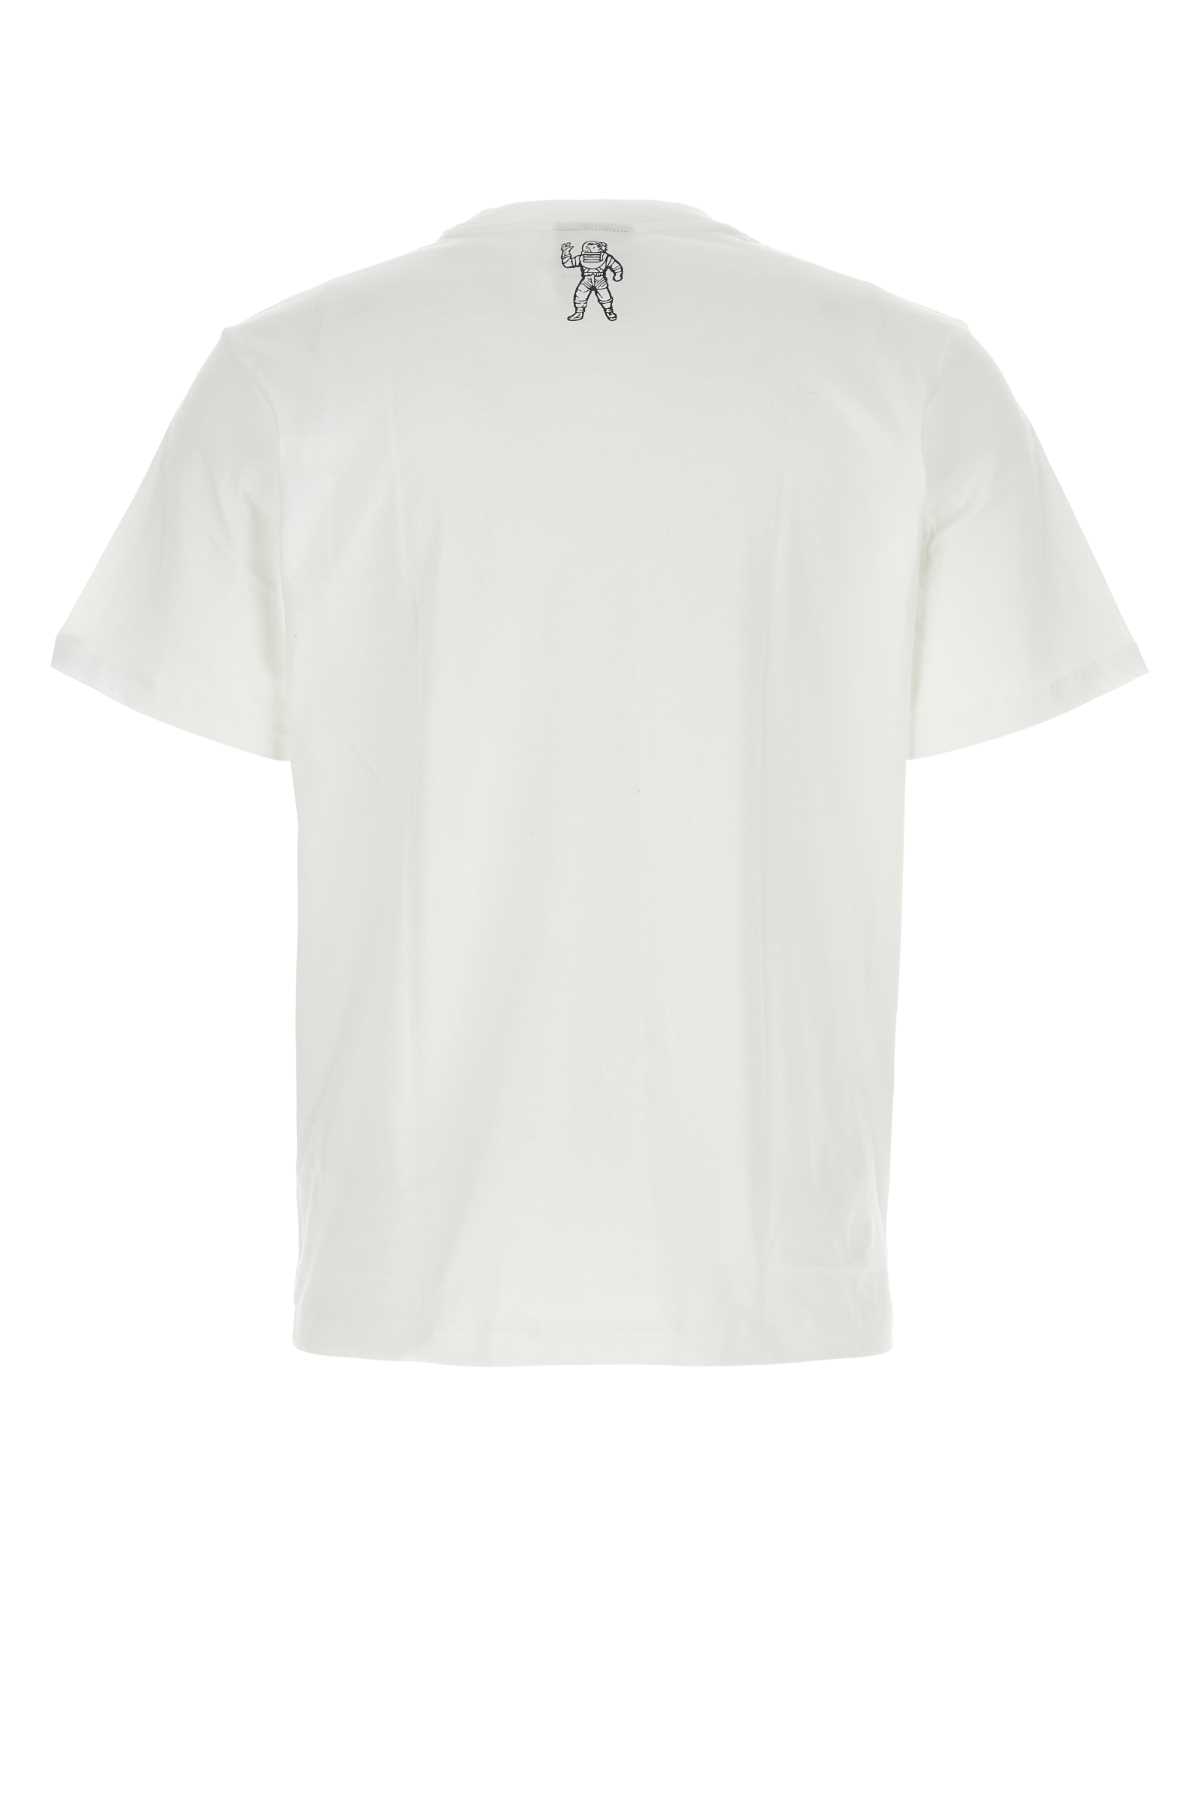 Billionaire Boys Club White Cotton T-shirt